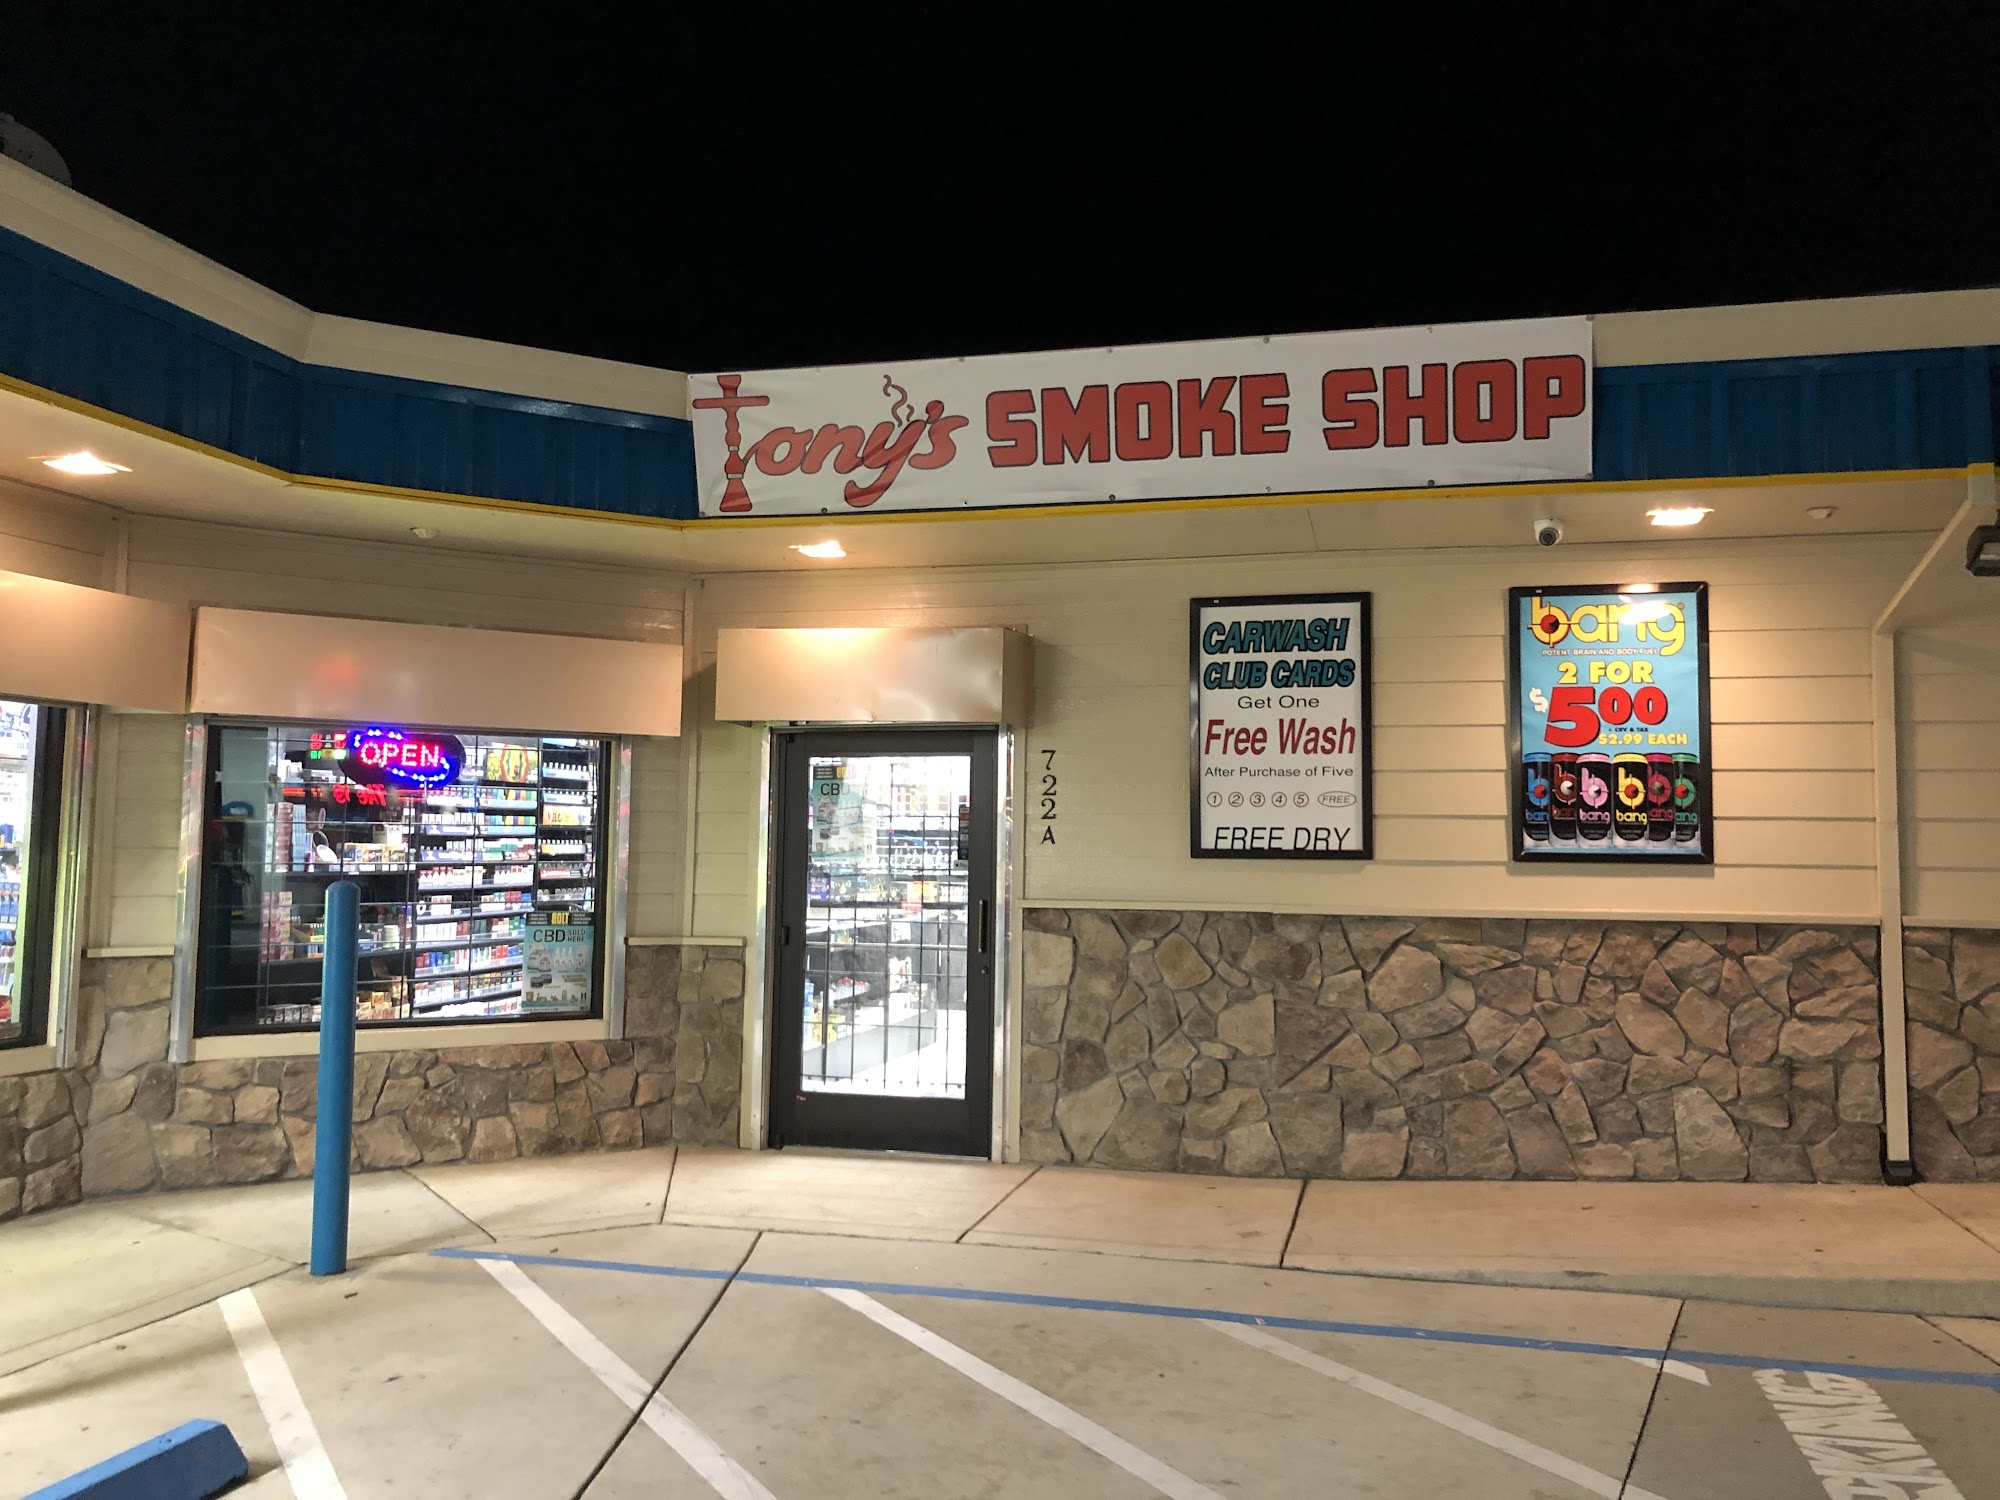 Tony’s smoke shop